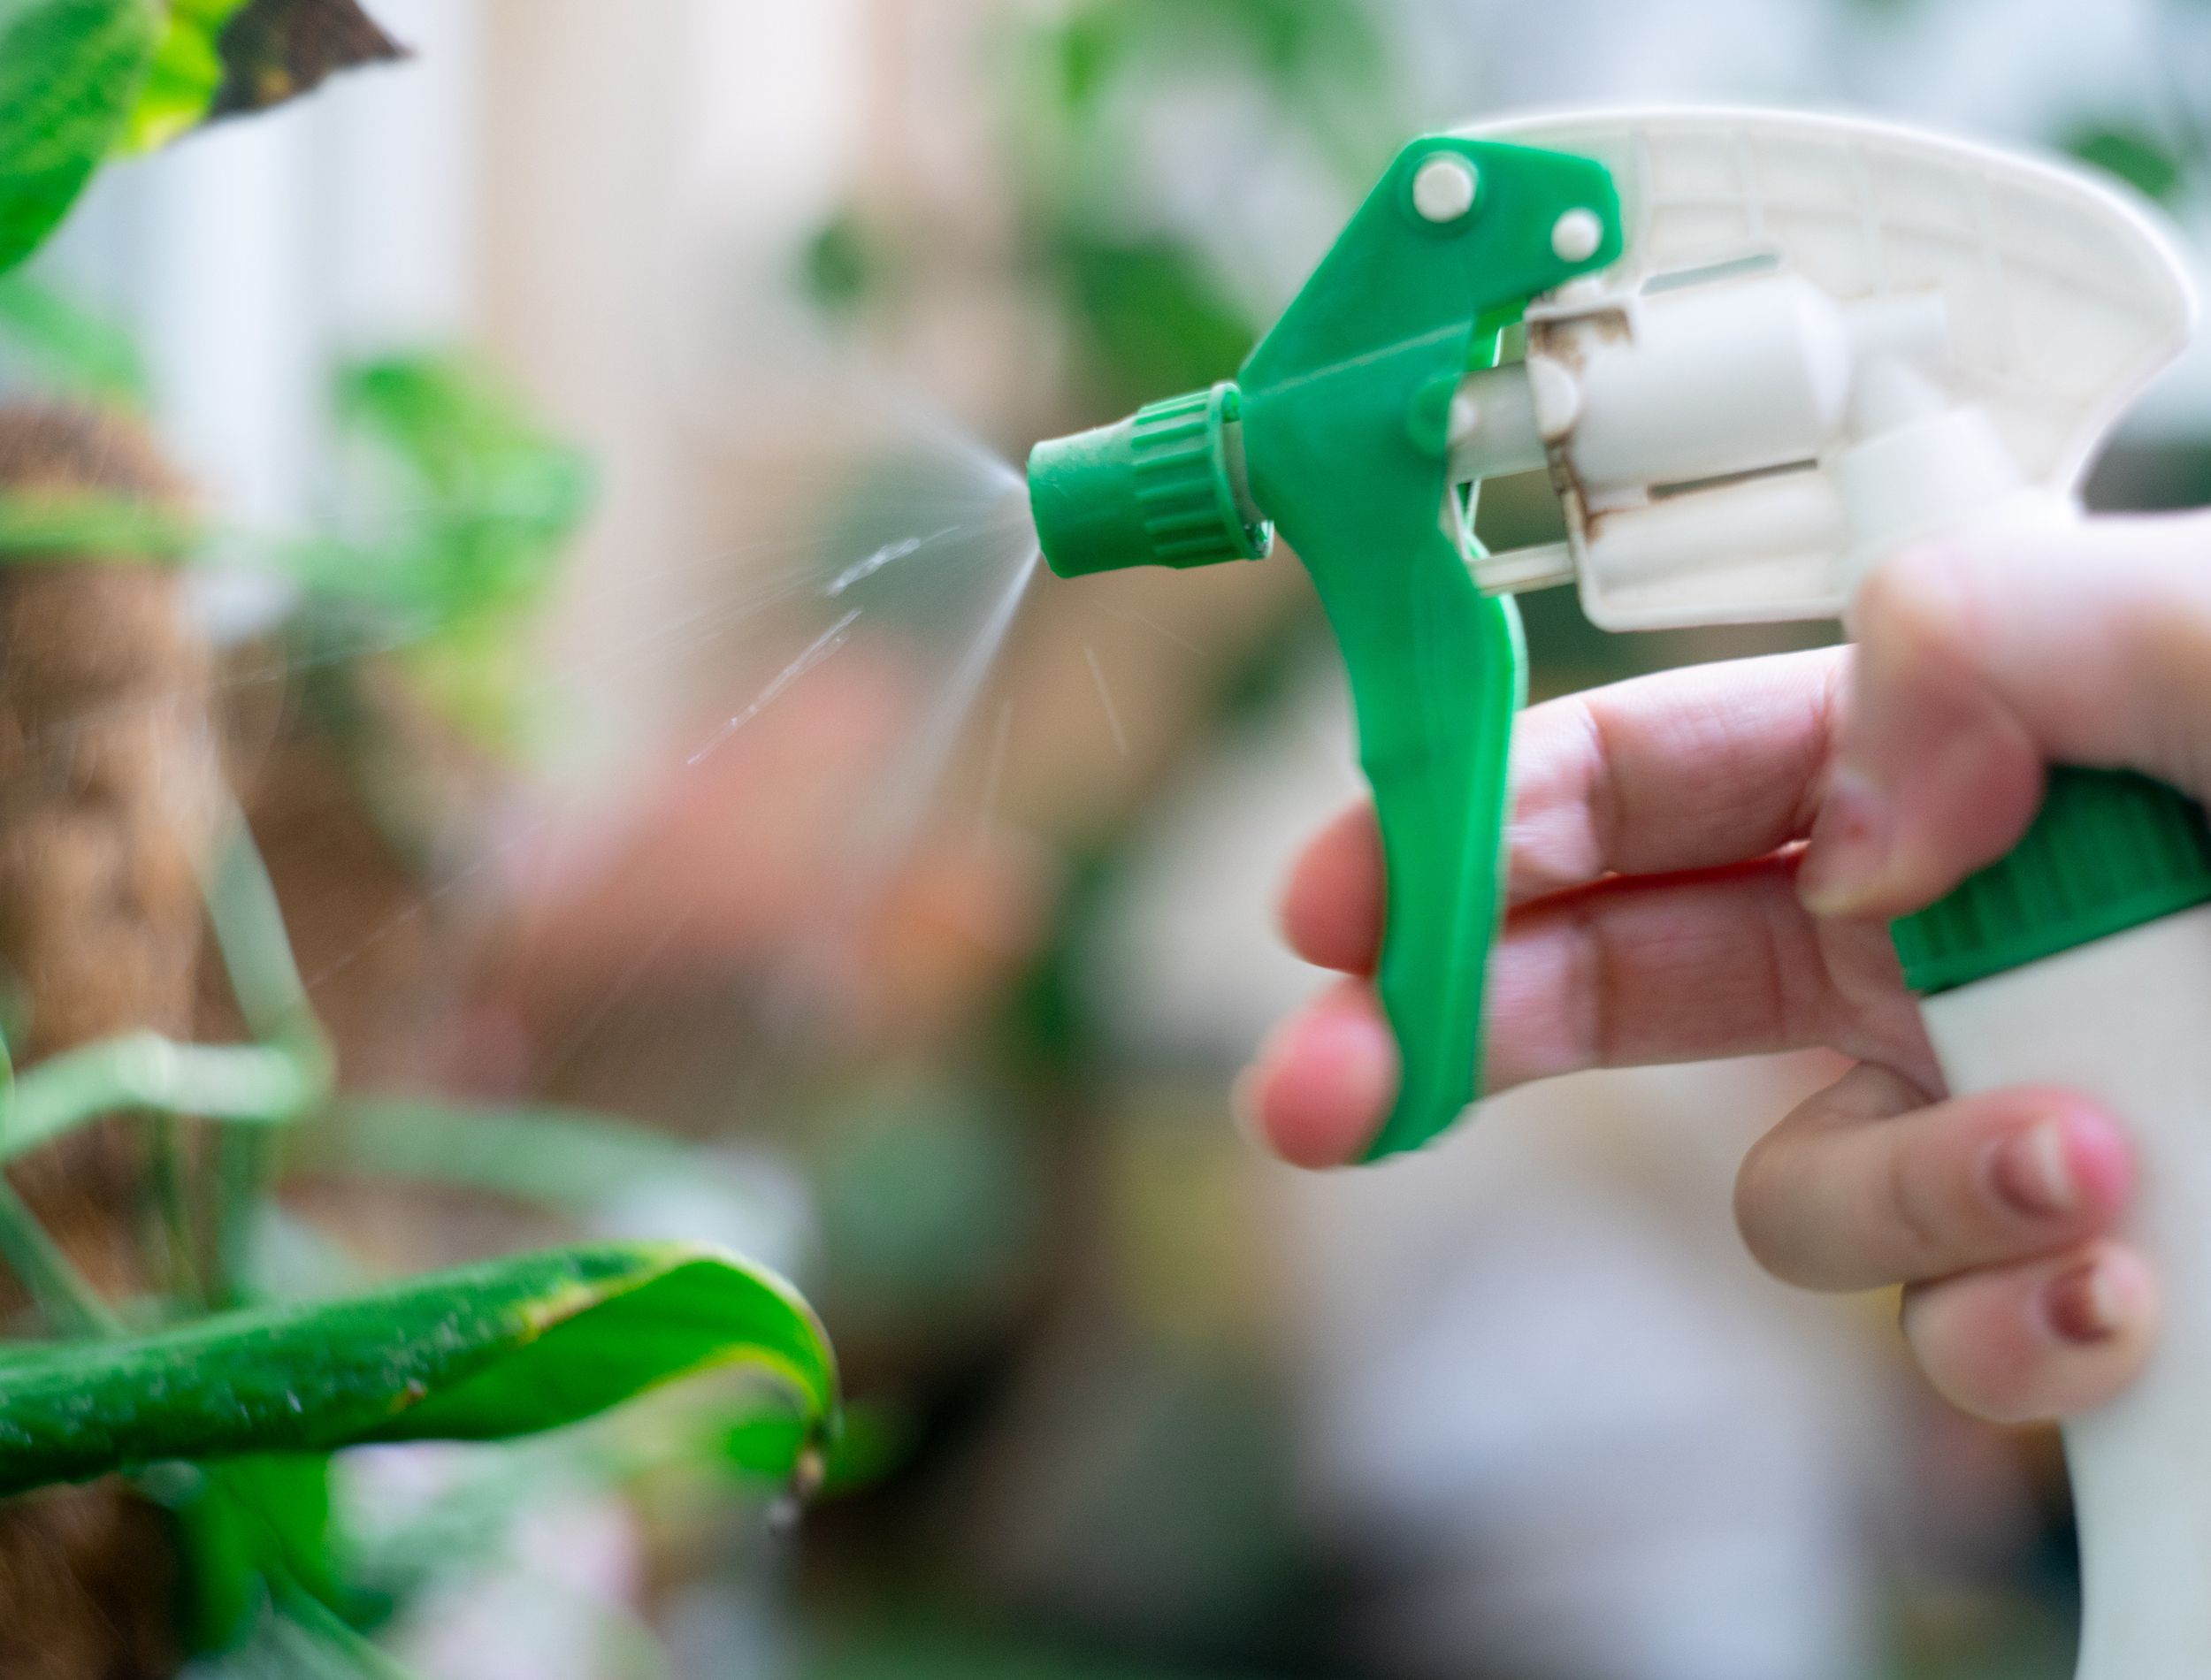 reen spray bottle being used to mist spray fertilizer, pesticide, water, anti fungal on home garden plants